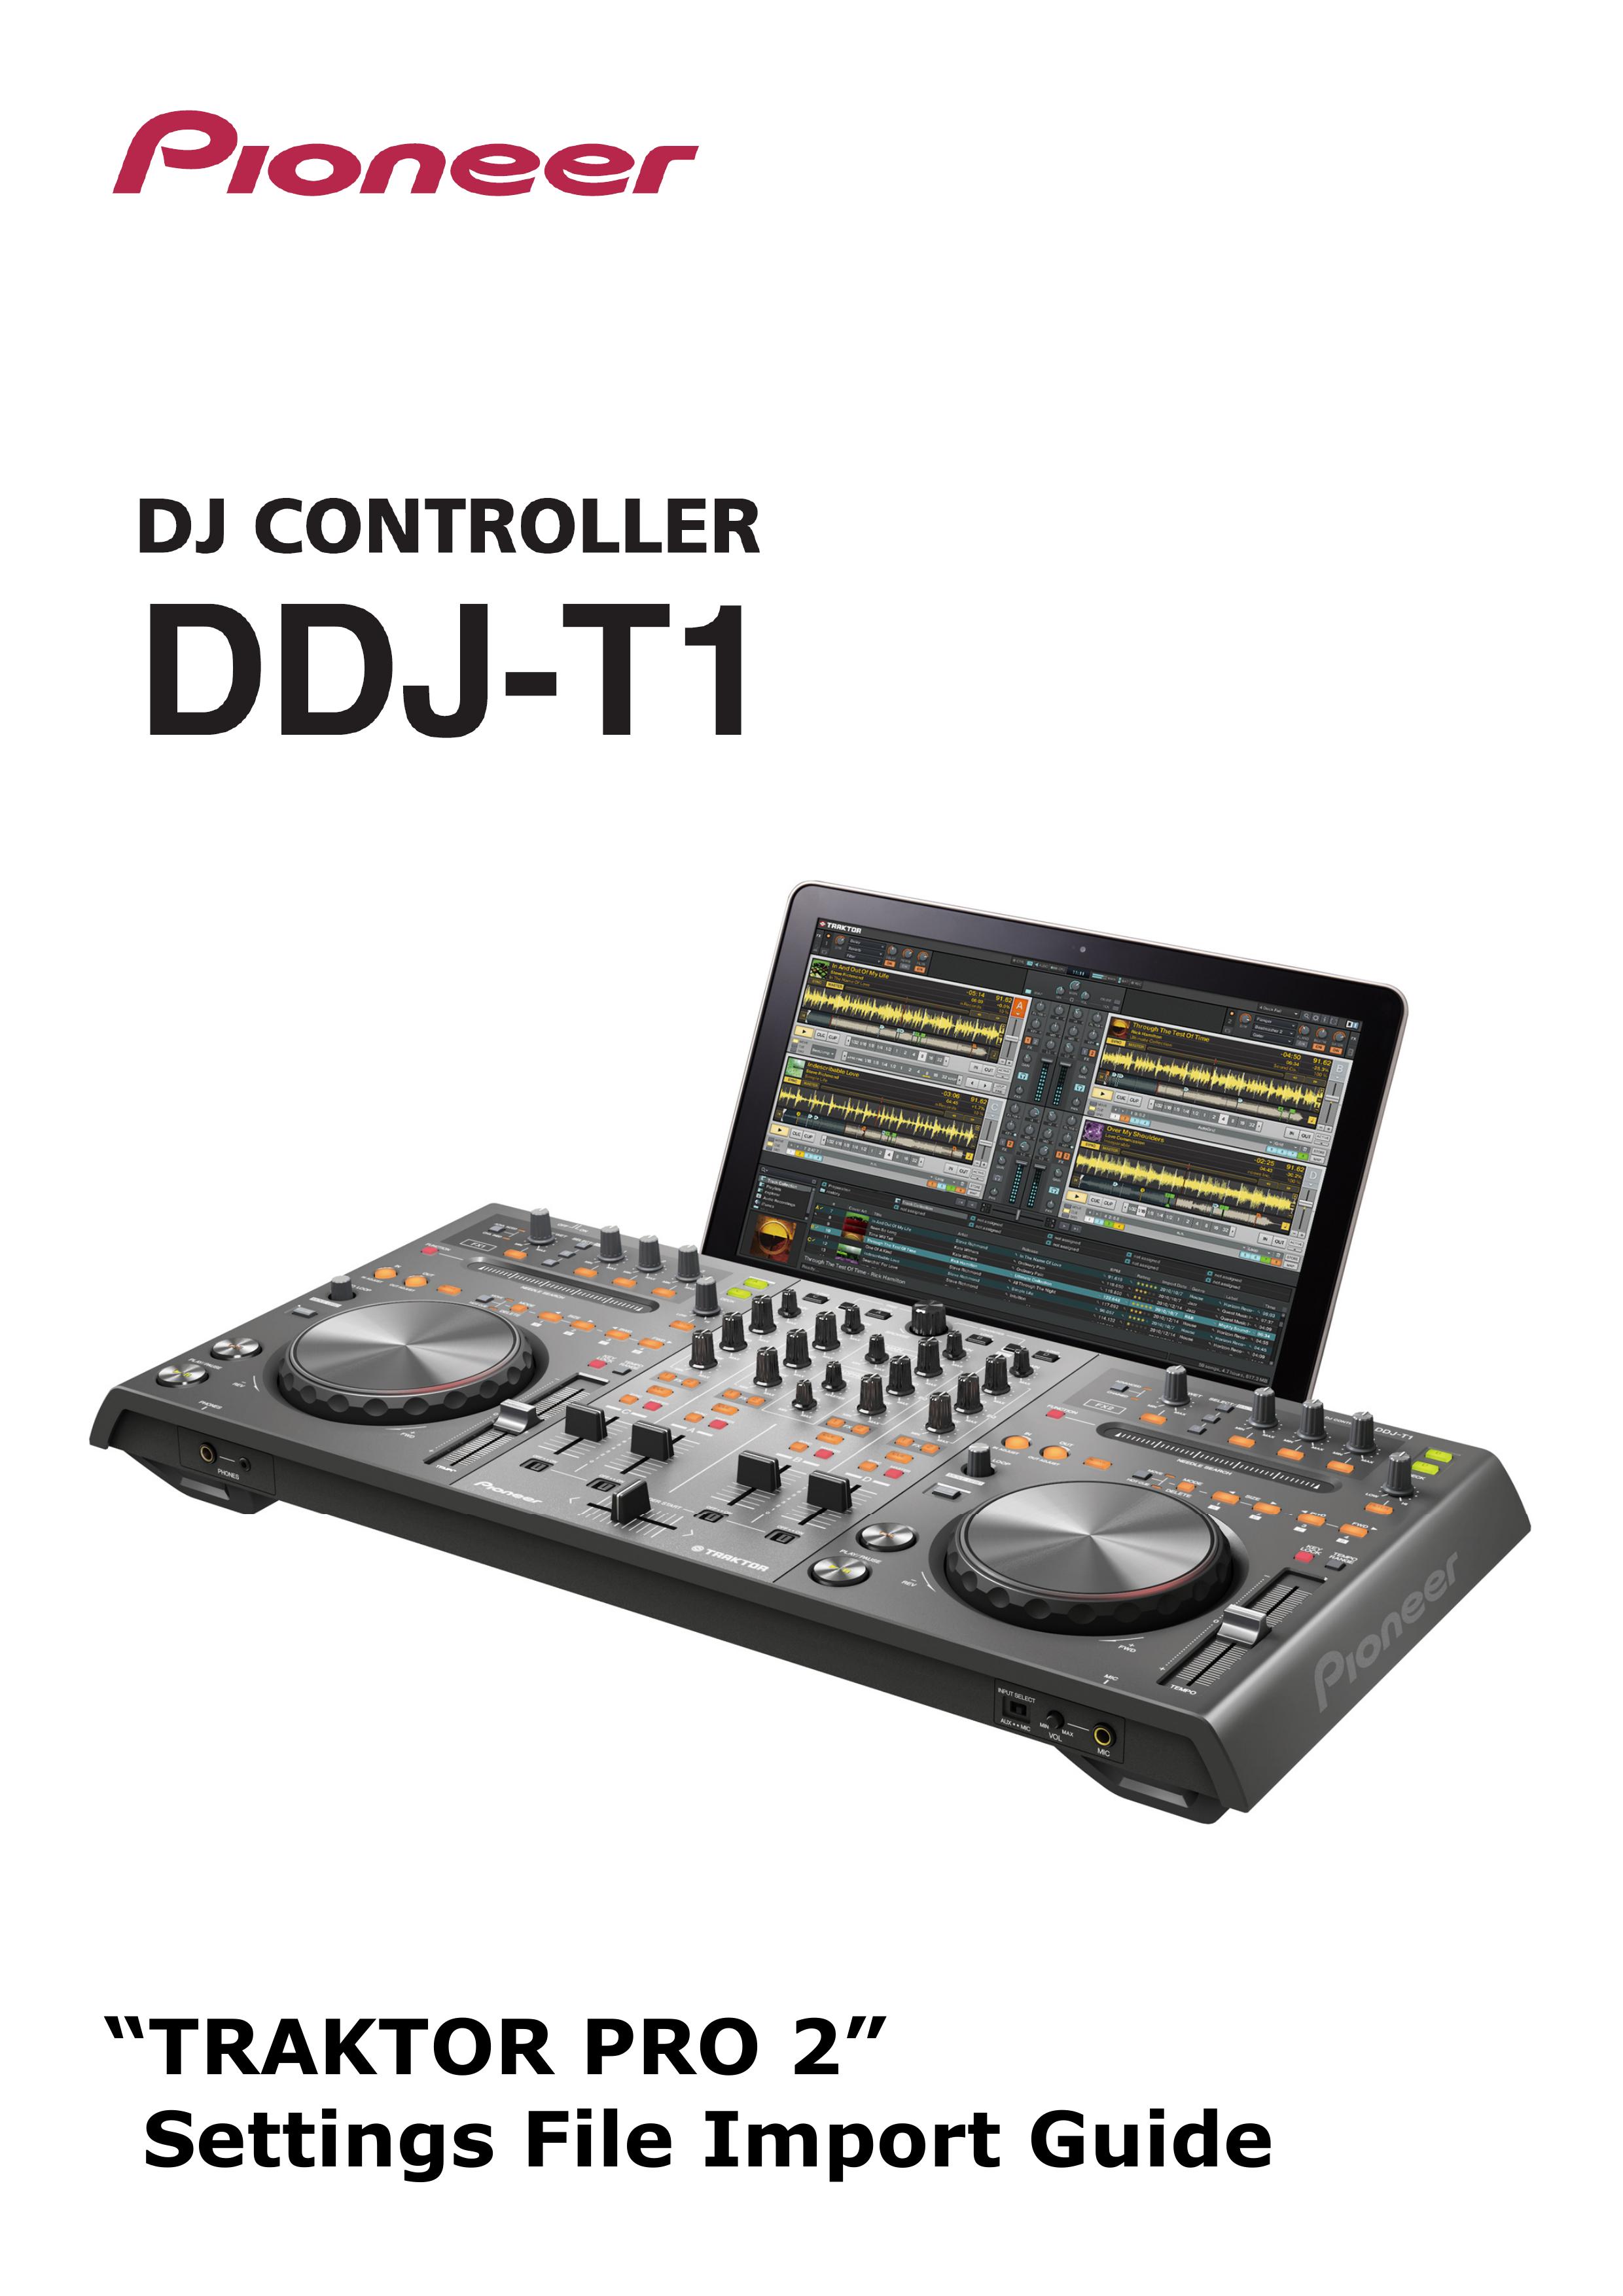 Pioneer DJ CONTROLLER TRAKTOR PRO 2 DJ Equipment User Manual